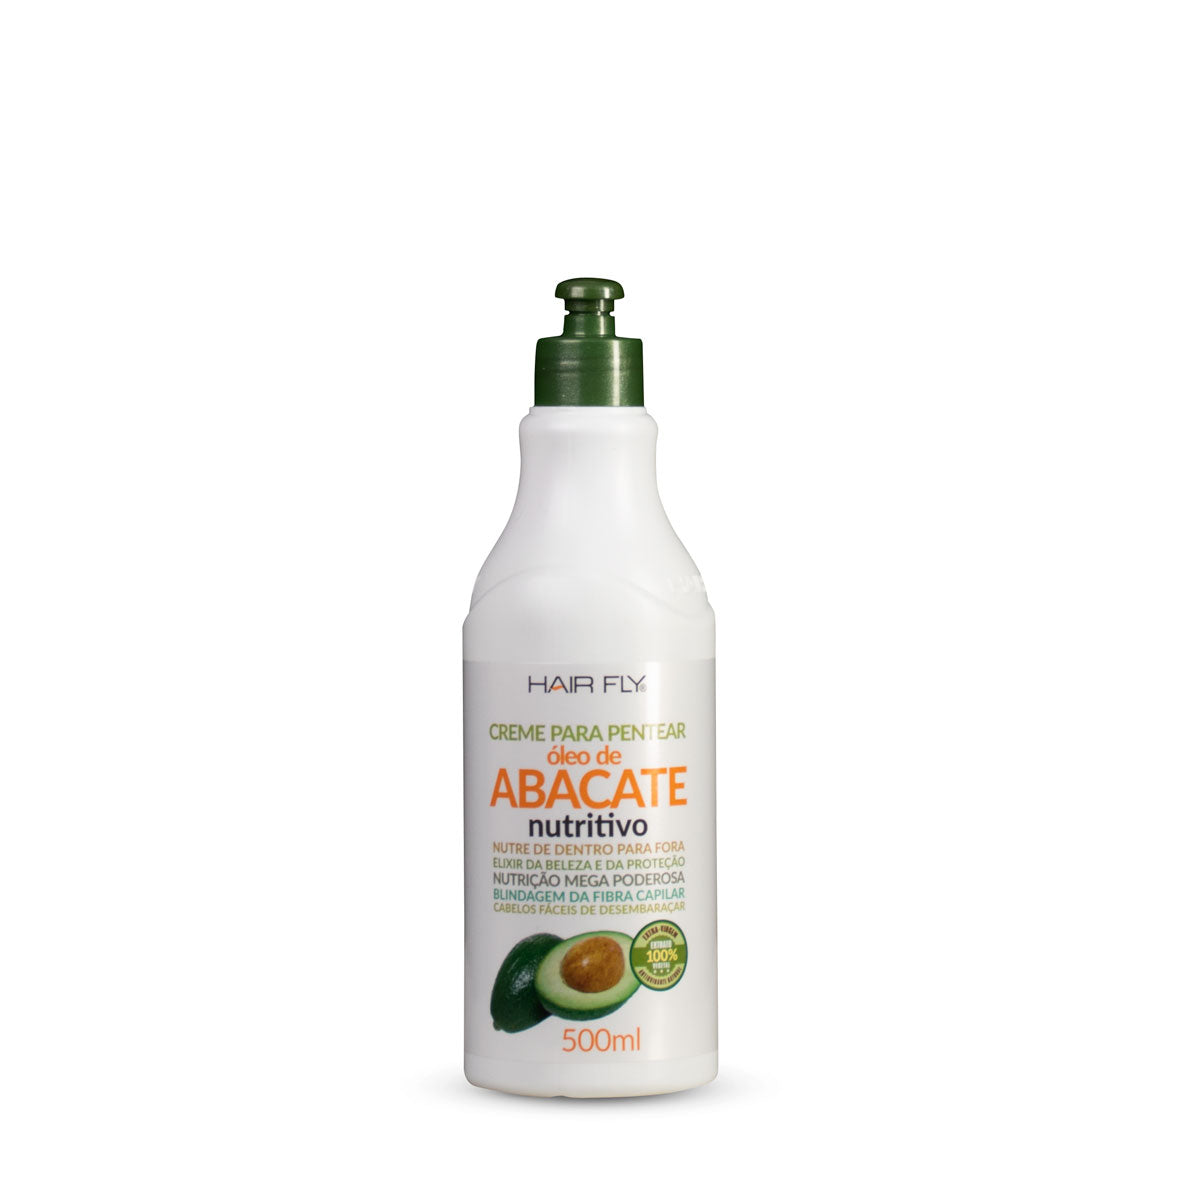 Hair Fly Hair Cream for Combing Hair Fly Combing Cream Avocado Oil - 500ml